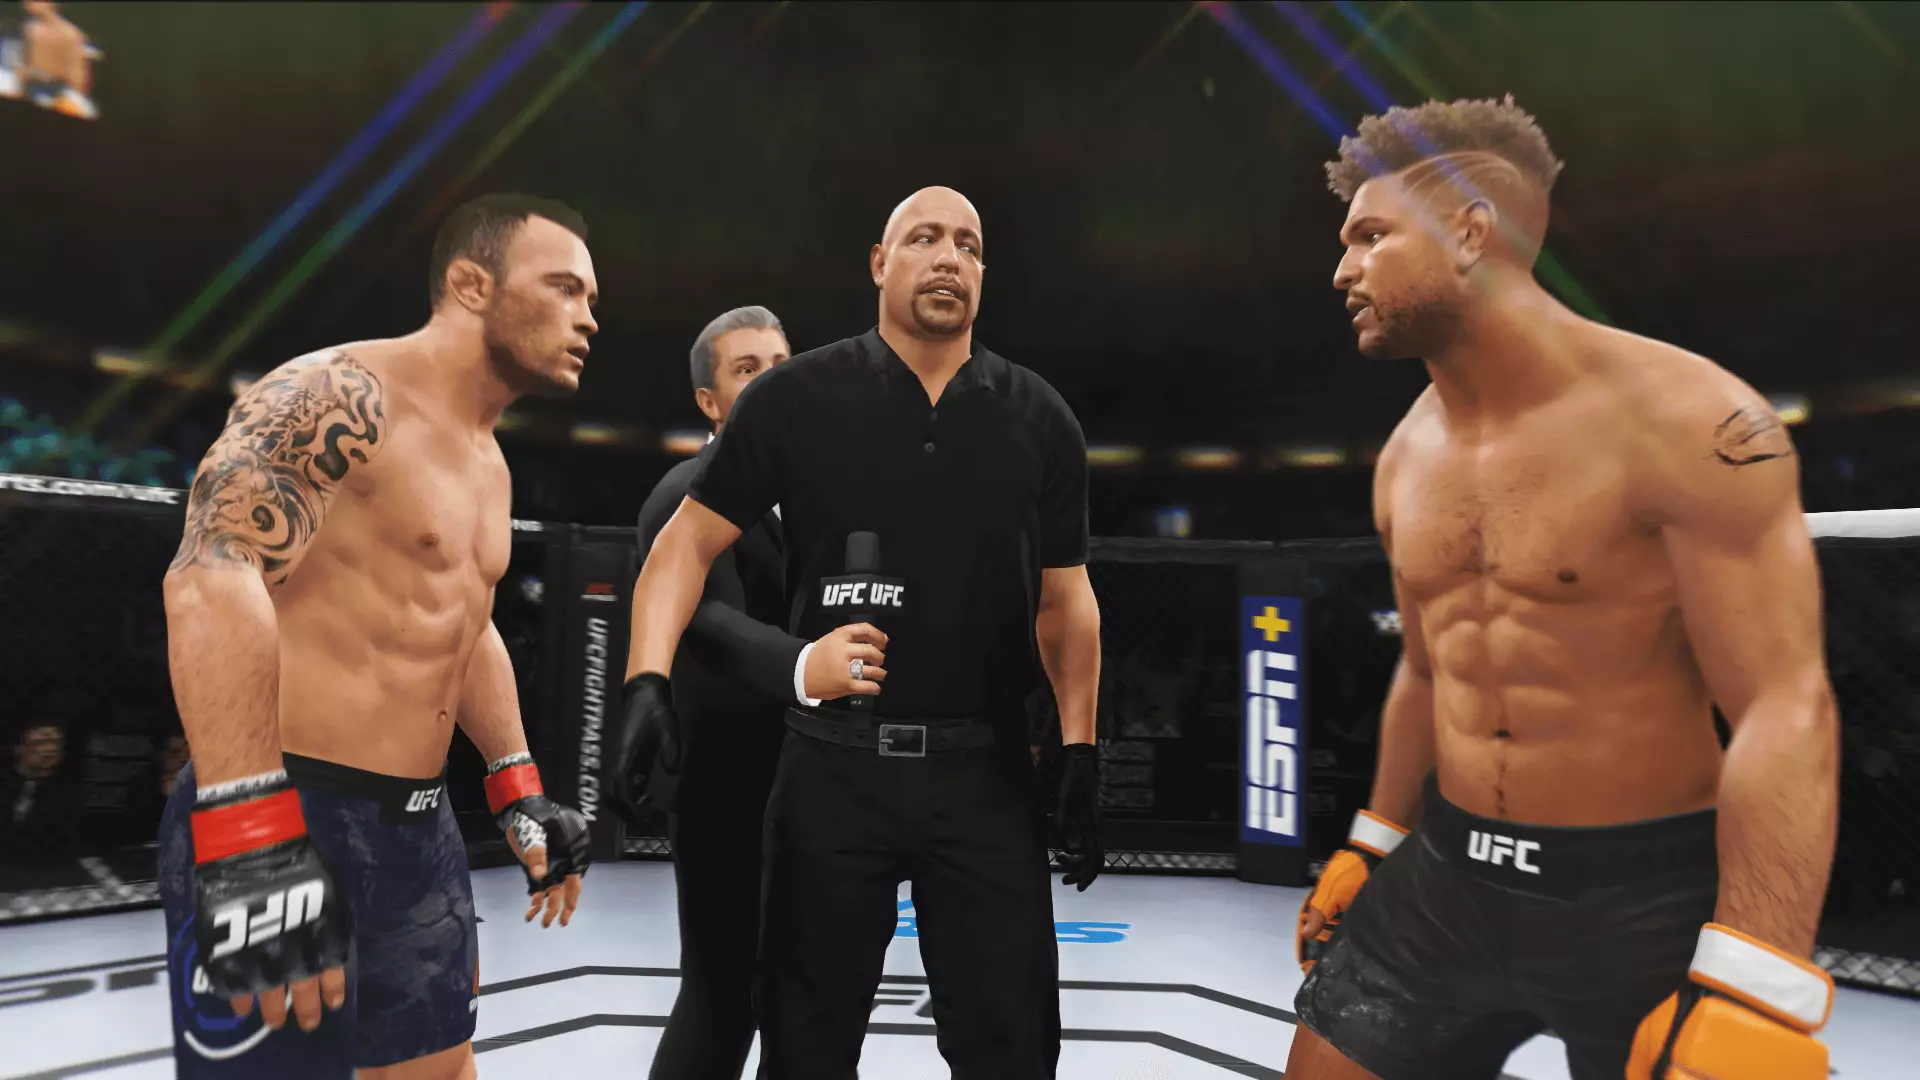 Image: UFC/EA Sports